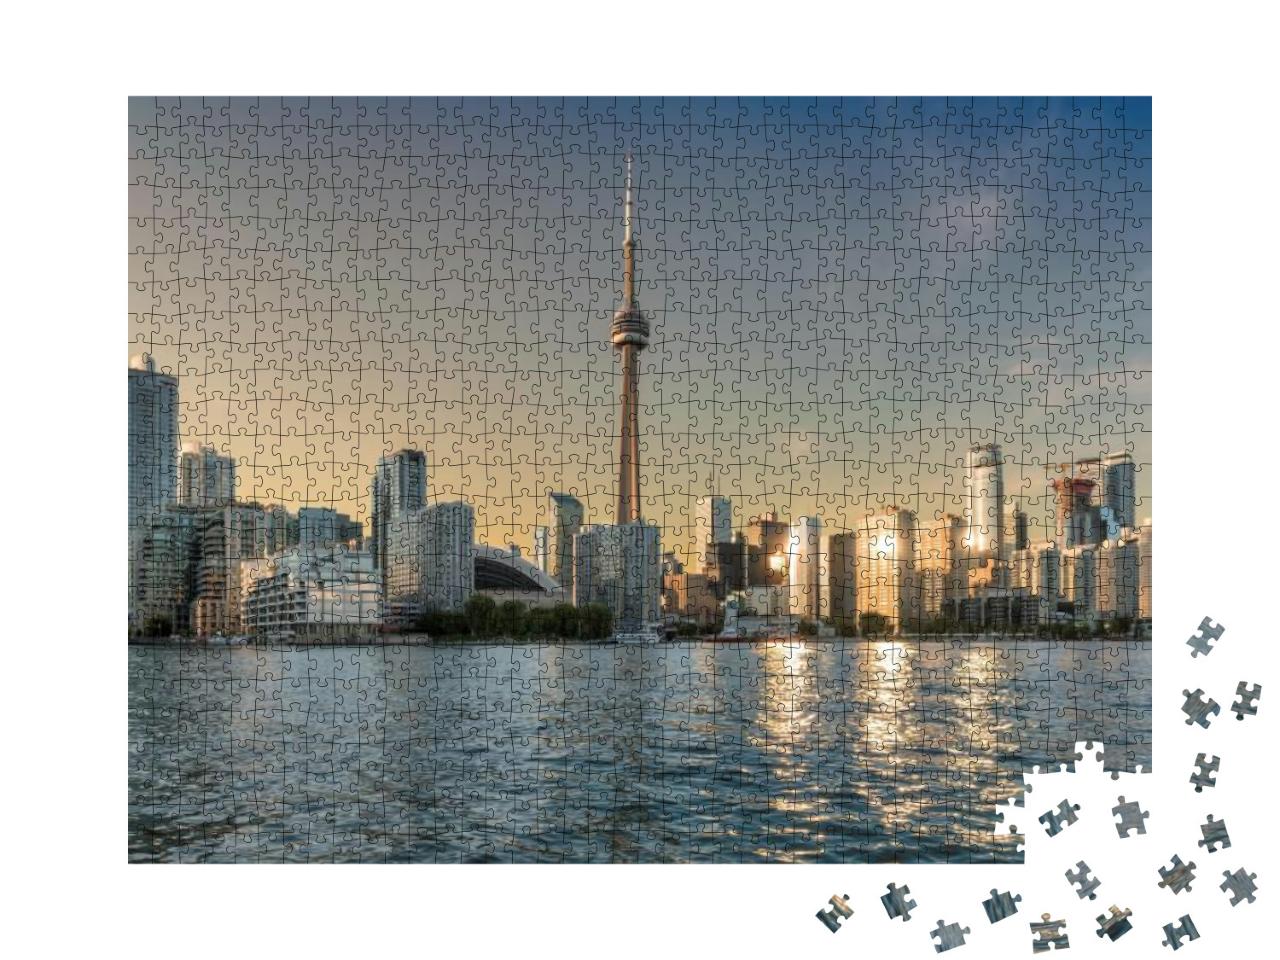 Puzzle 1000 Teile „Skyline von Toronto bei Sonnenuntergang, Ontario, Kanada“